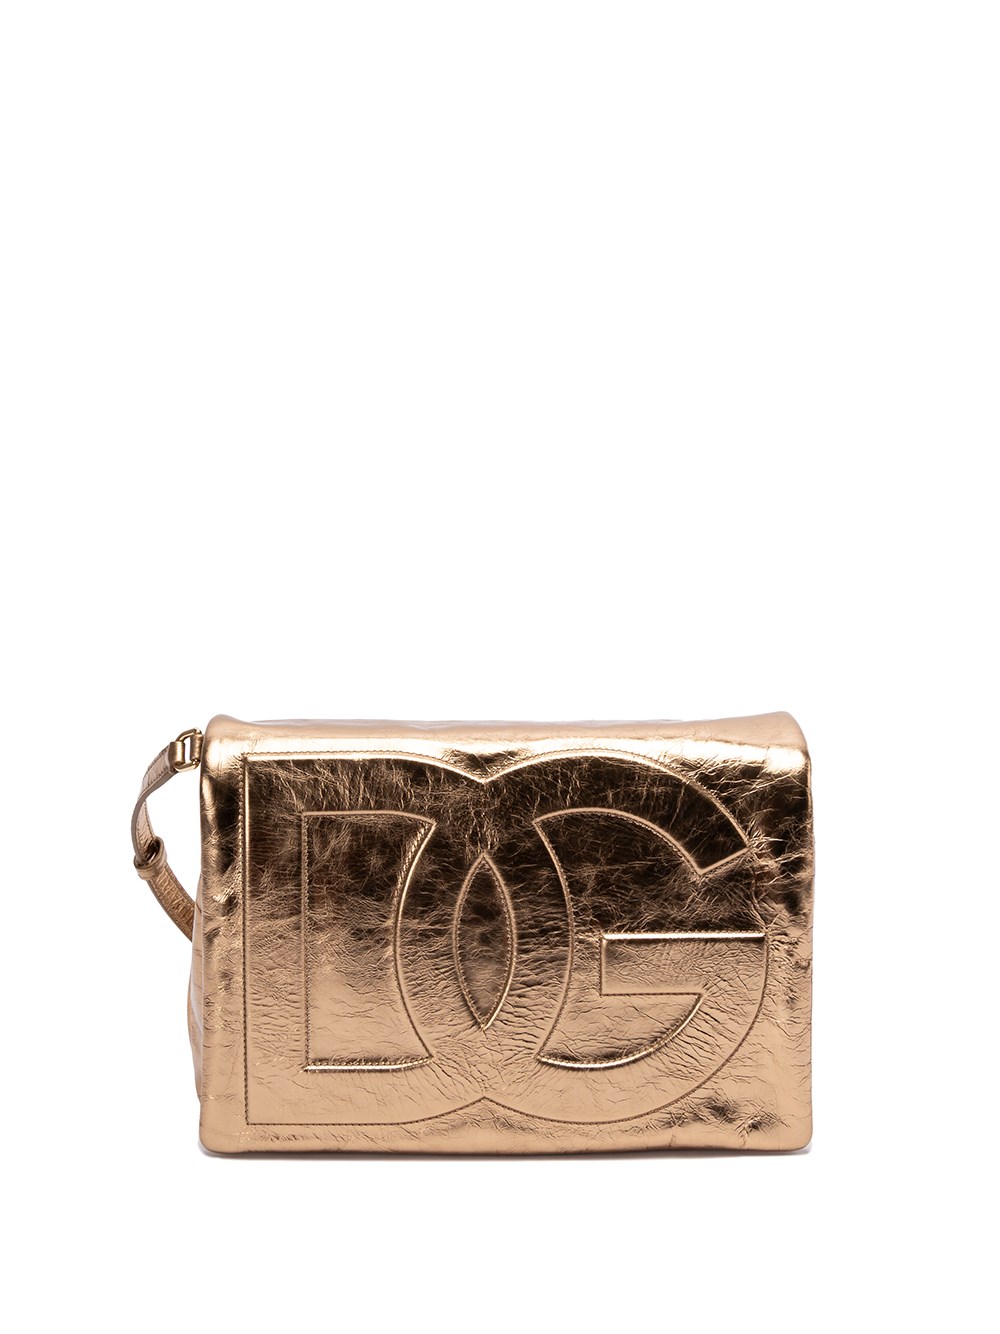 Dolce & Gabbana Leather Dg Logo Bag In Metallic